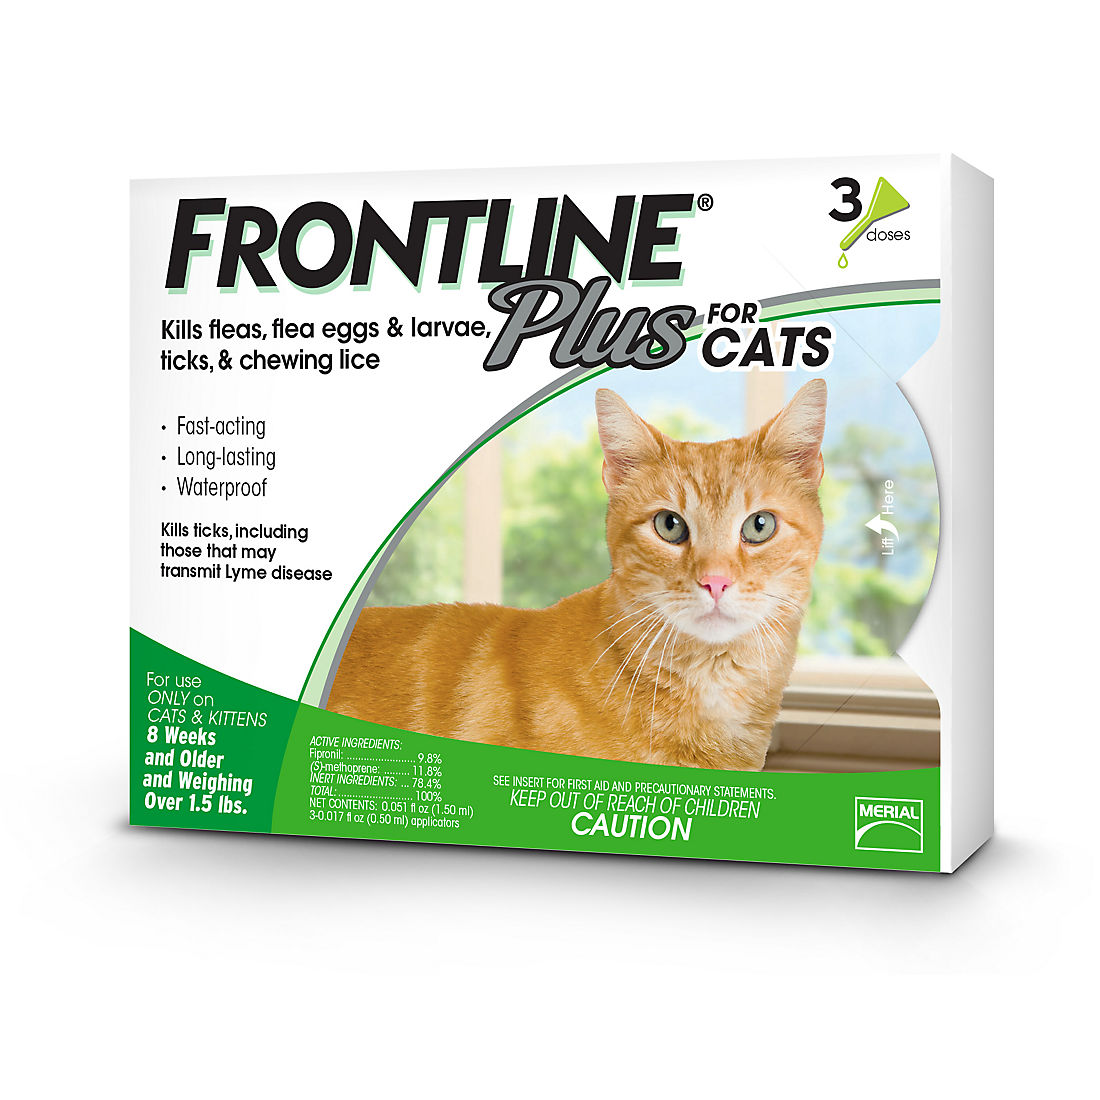 Prescription Strength Flea Medicine For Cats